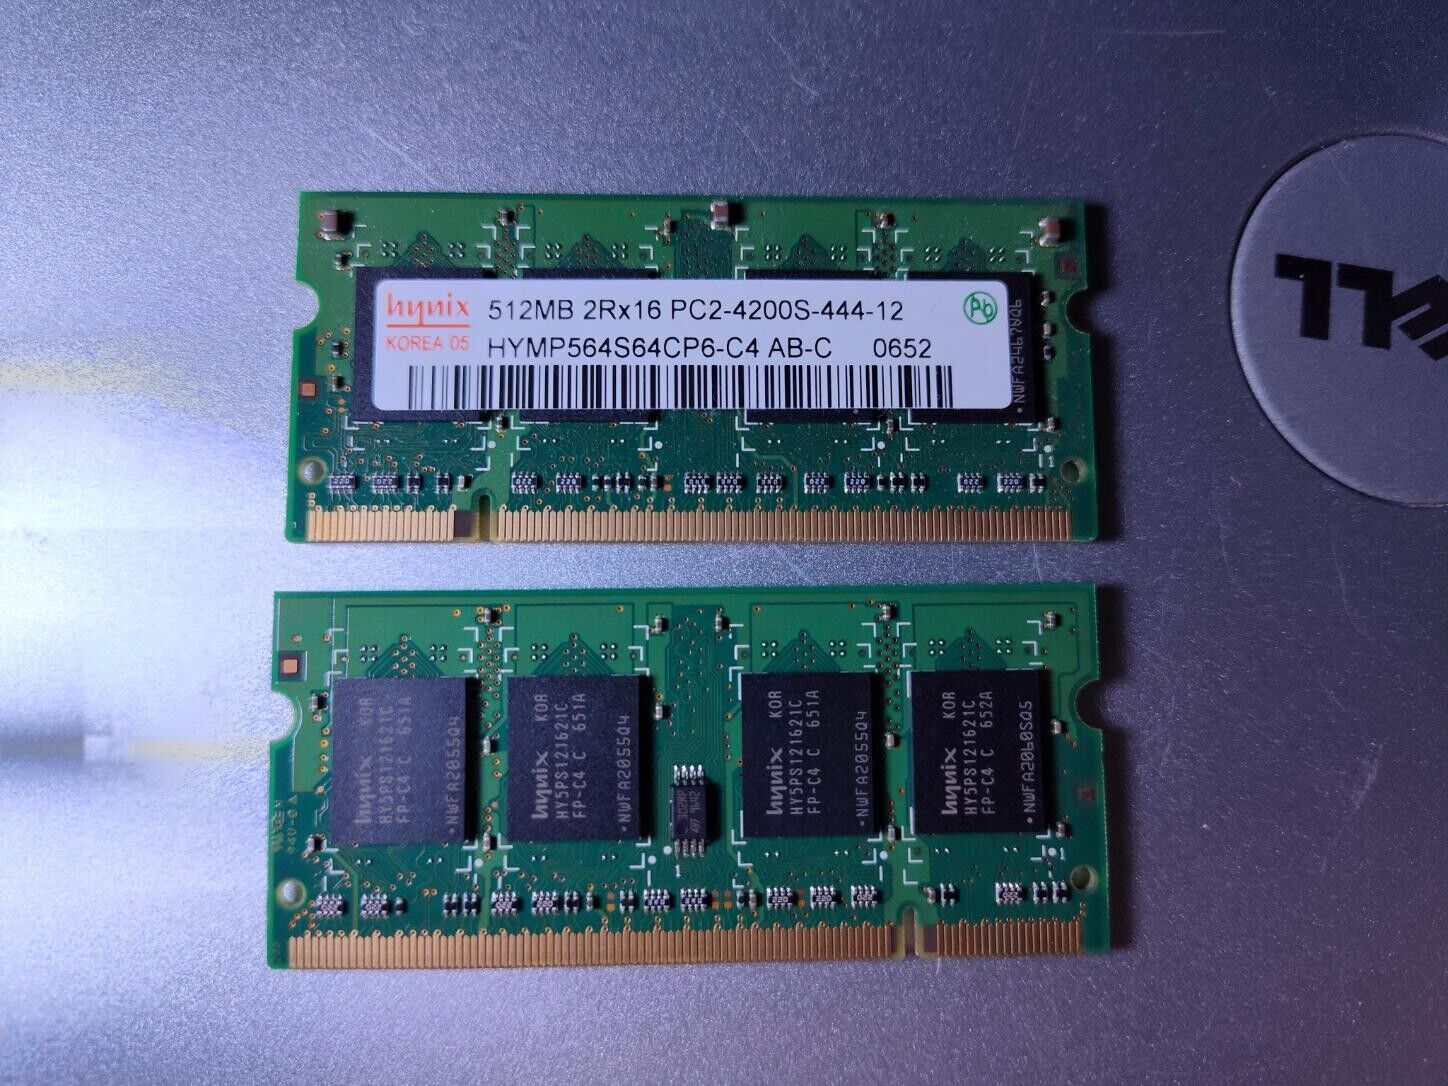 2 Hynix 512MB EACH 2Rx16 PC2-4200S-444-12 DDR2 Laptop Memory (1GB Total Ram)